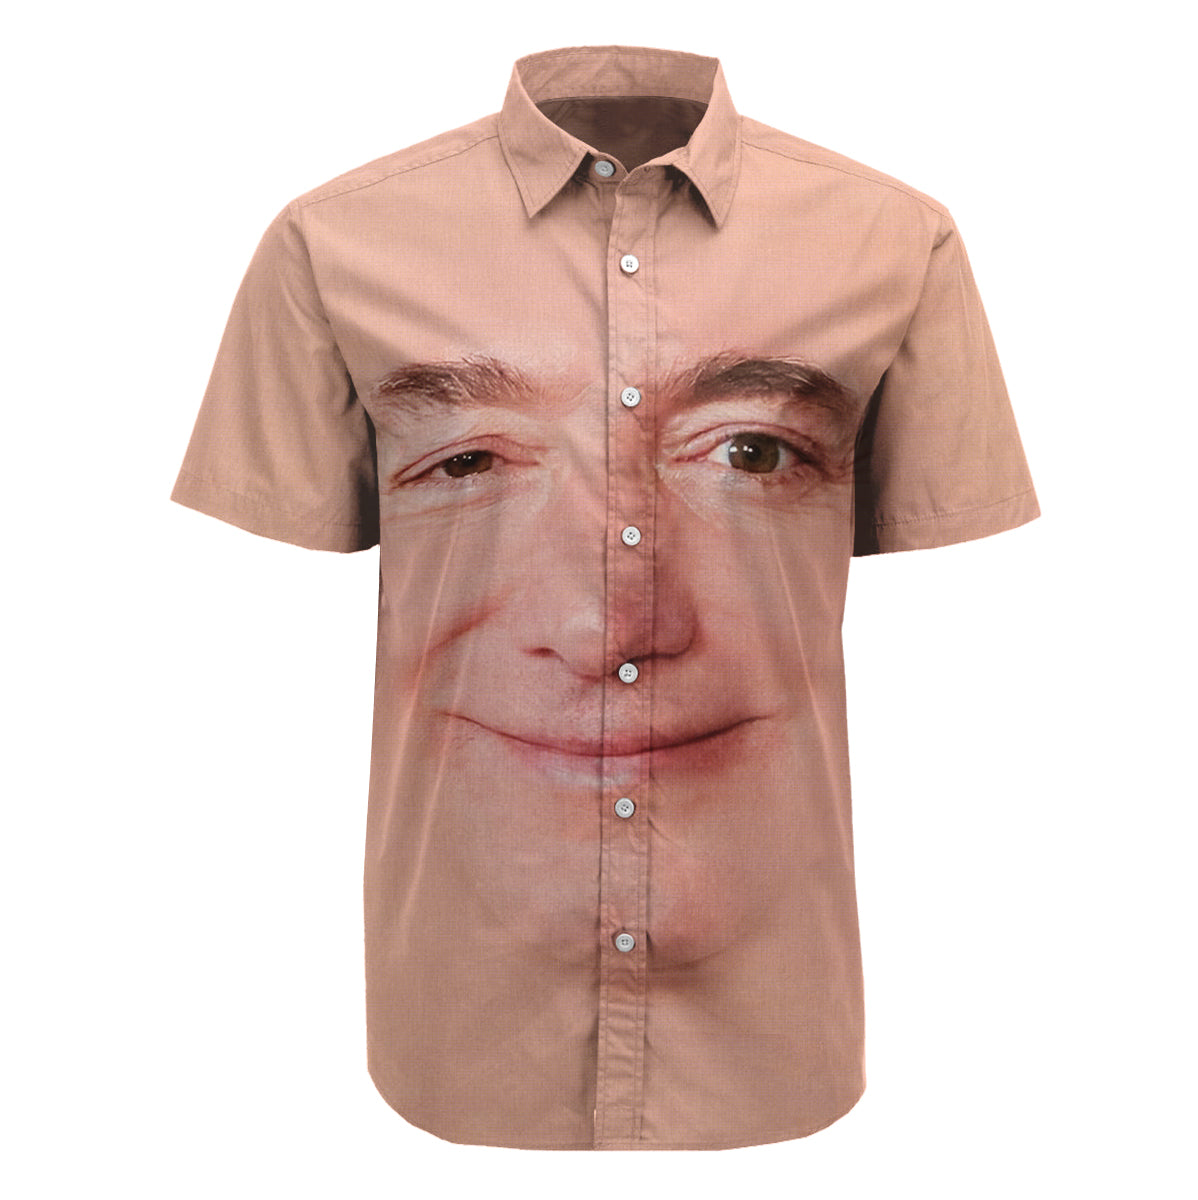 Jeff Bezos Button Up